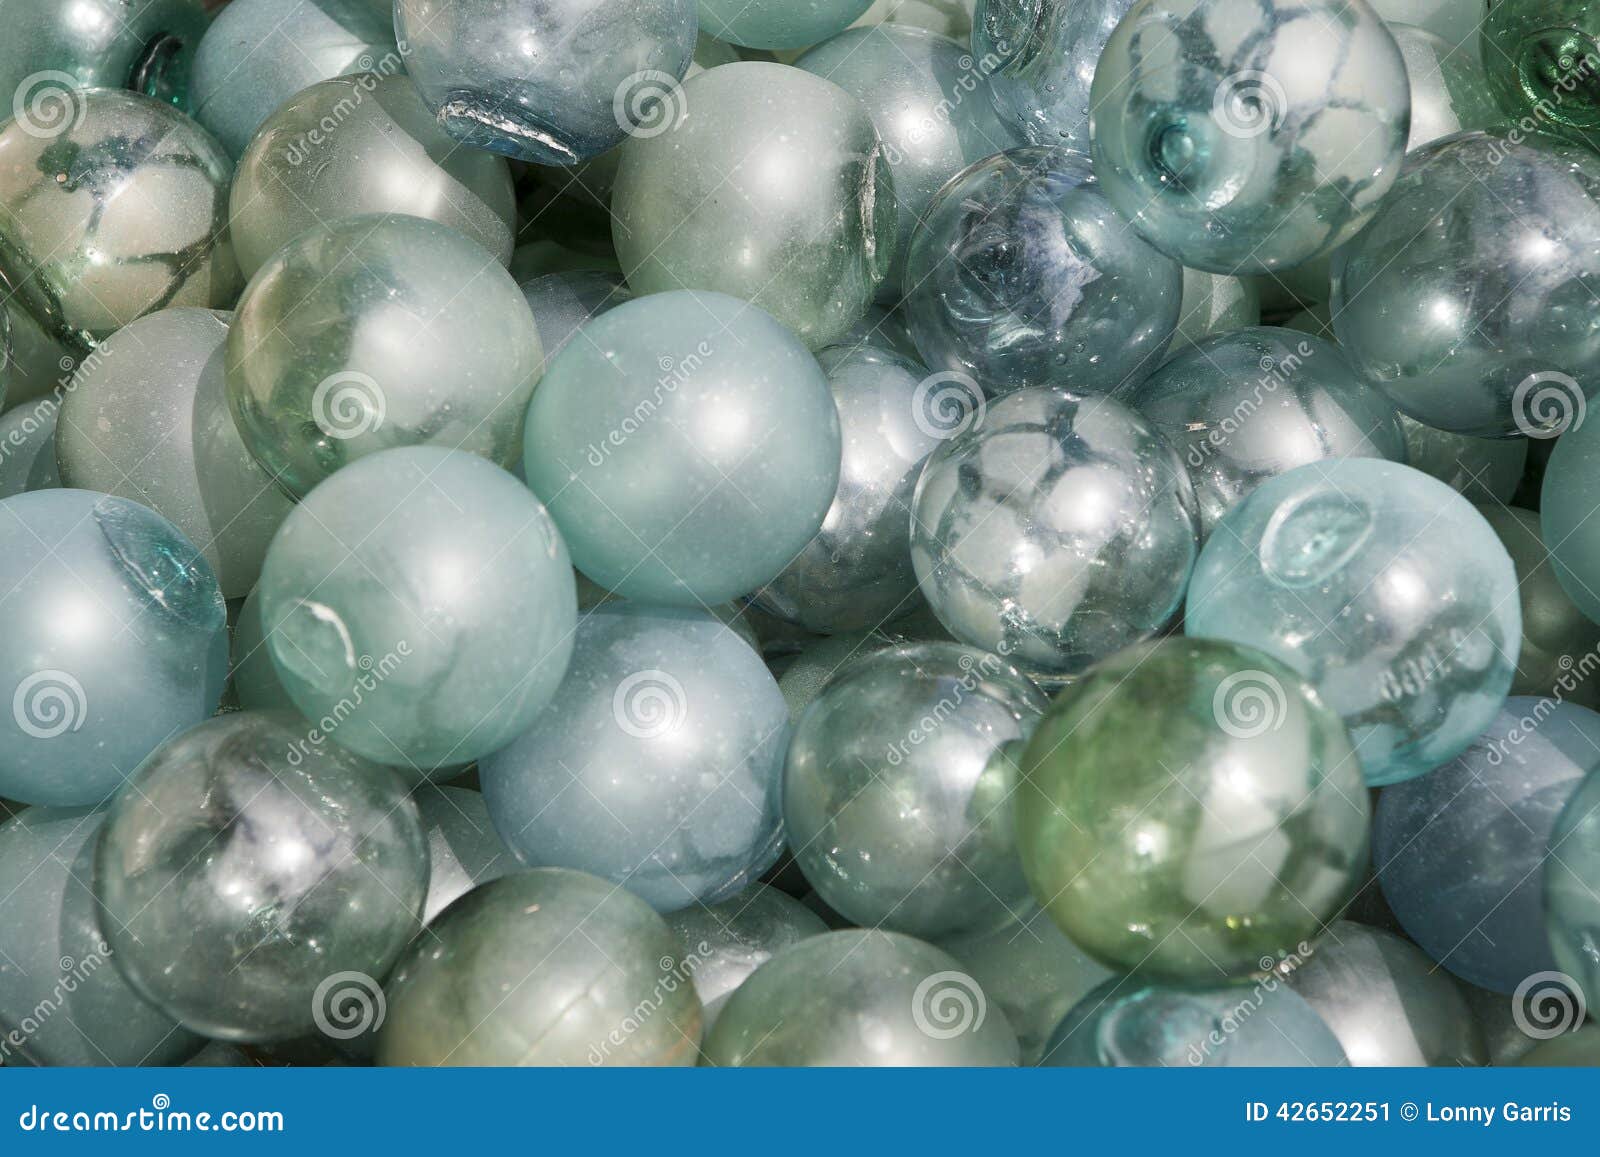 Japanese glass floats stock image. Image of blue, nets - 42652251